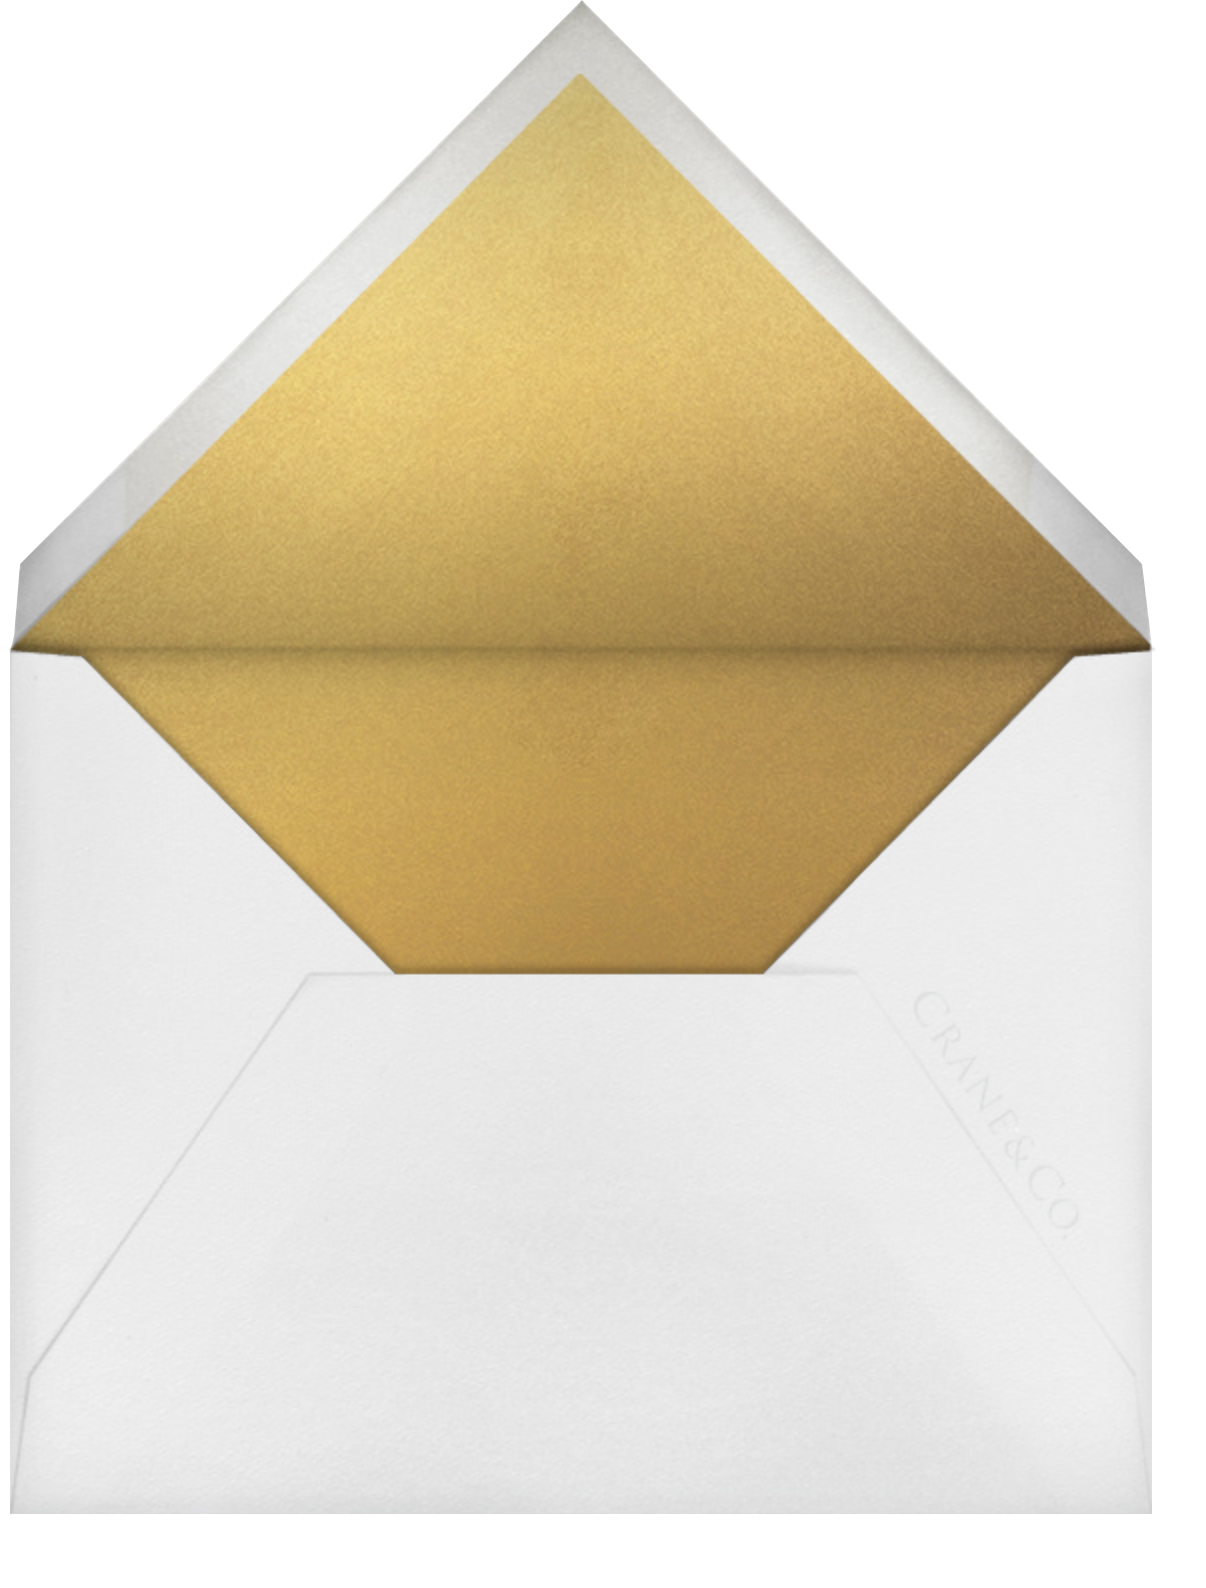 Candela (Save the Date) - Gold - Crane & Co. - Envelope